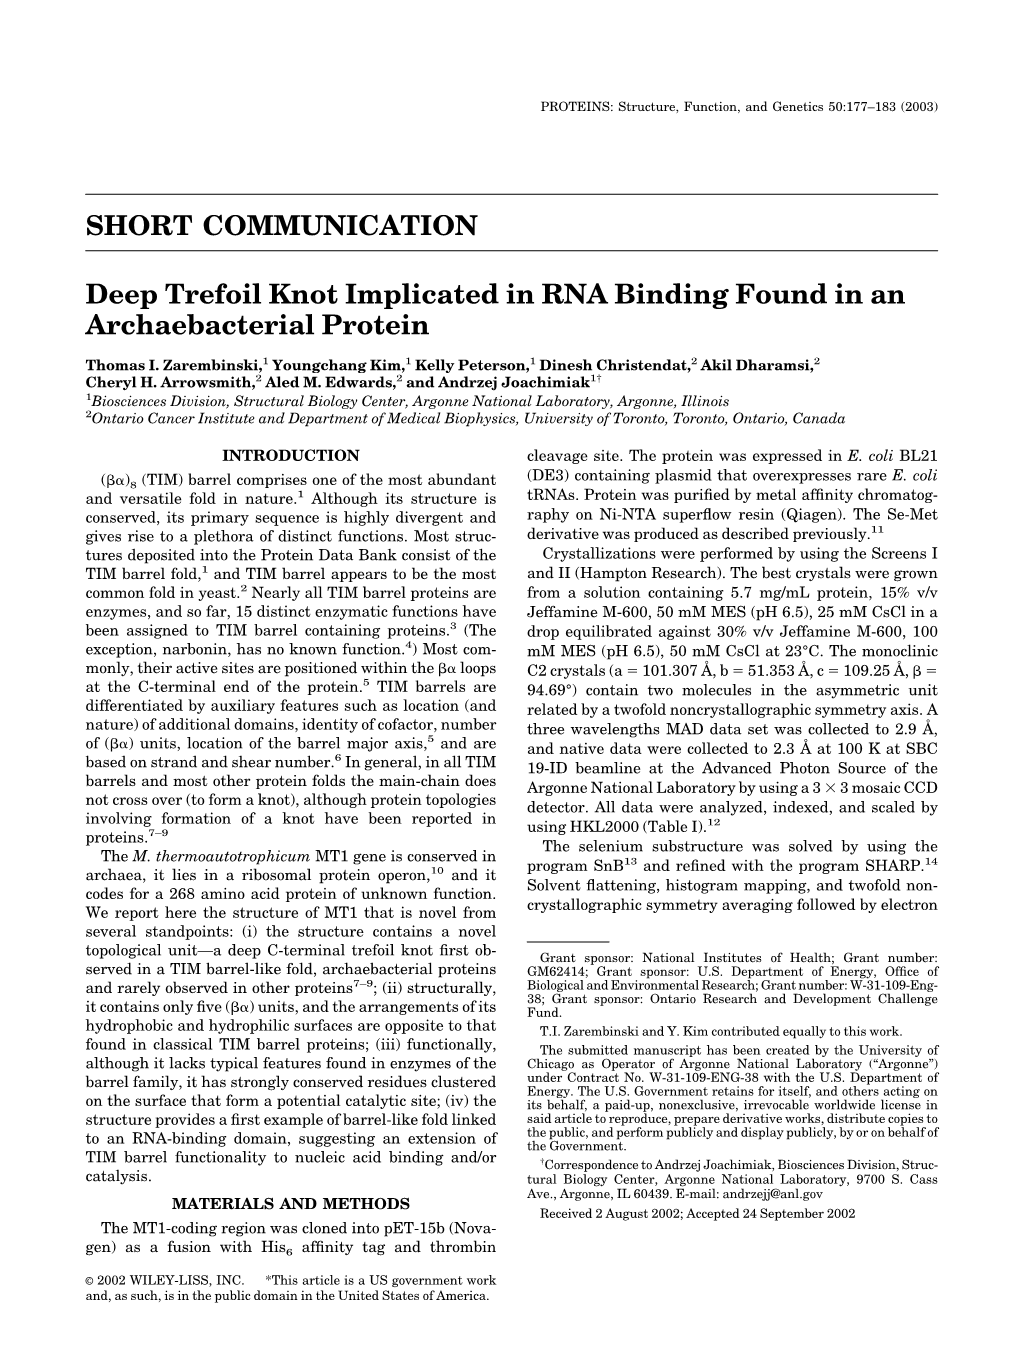 SHORT COMMUNICATION Deep Trefoil Knot Implicated in RNA